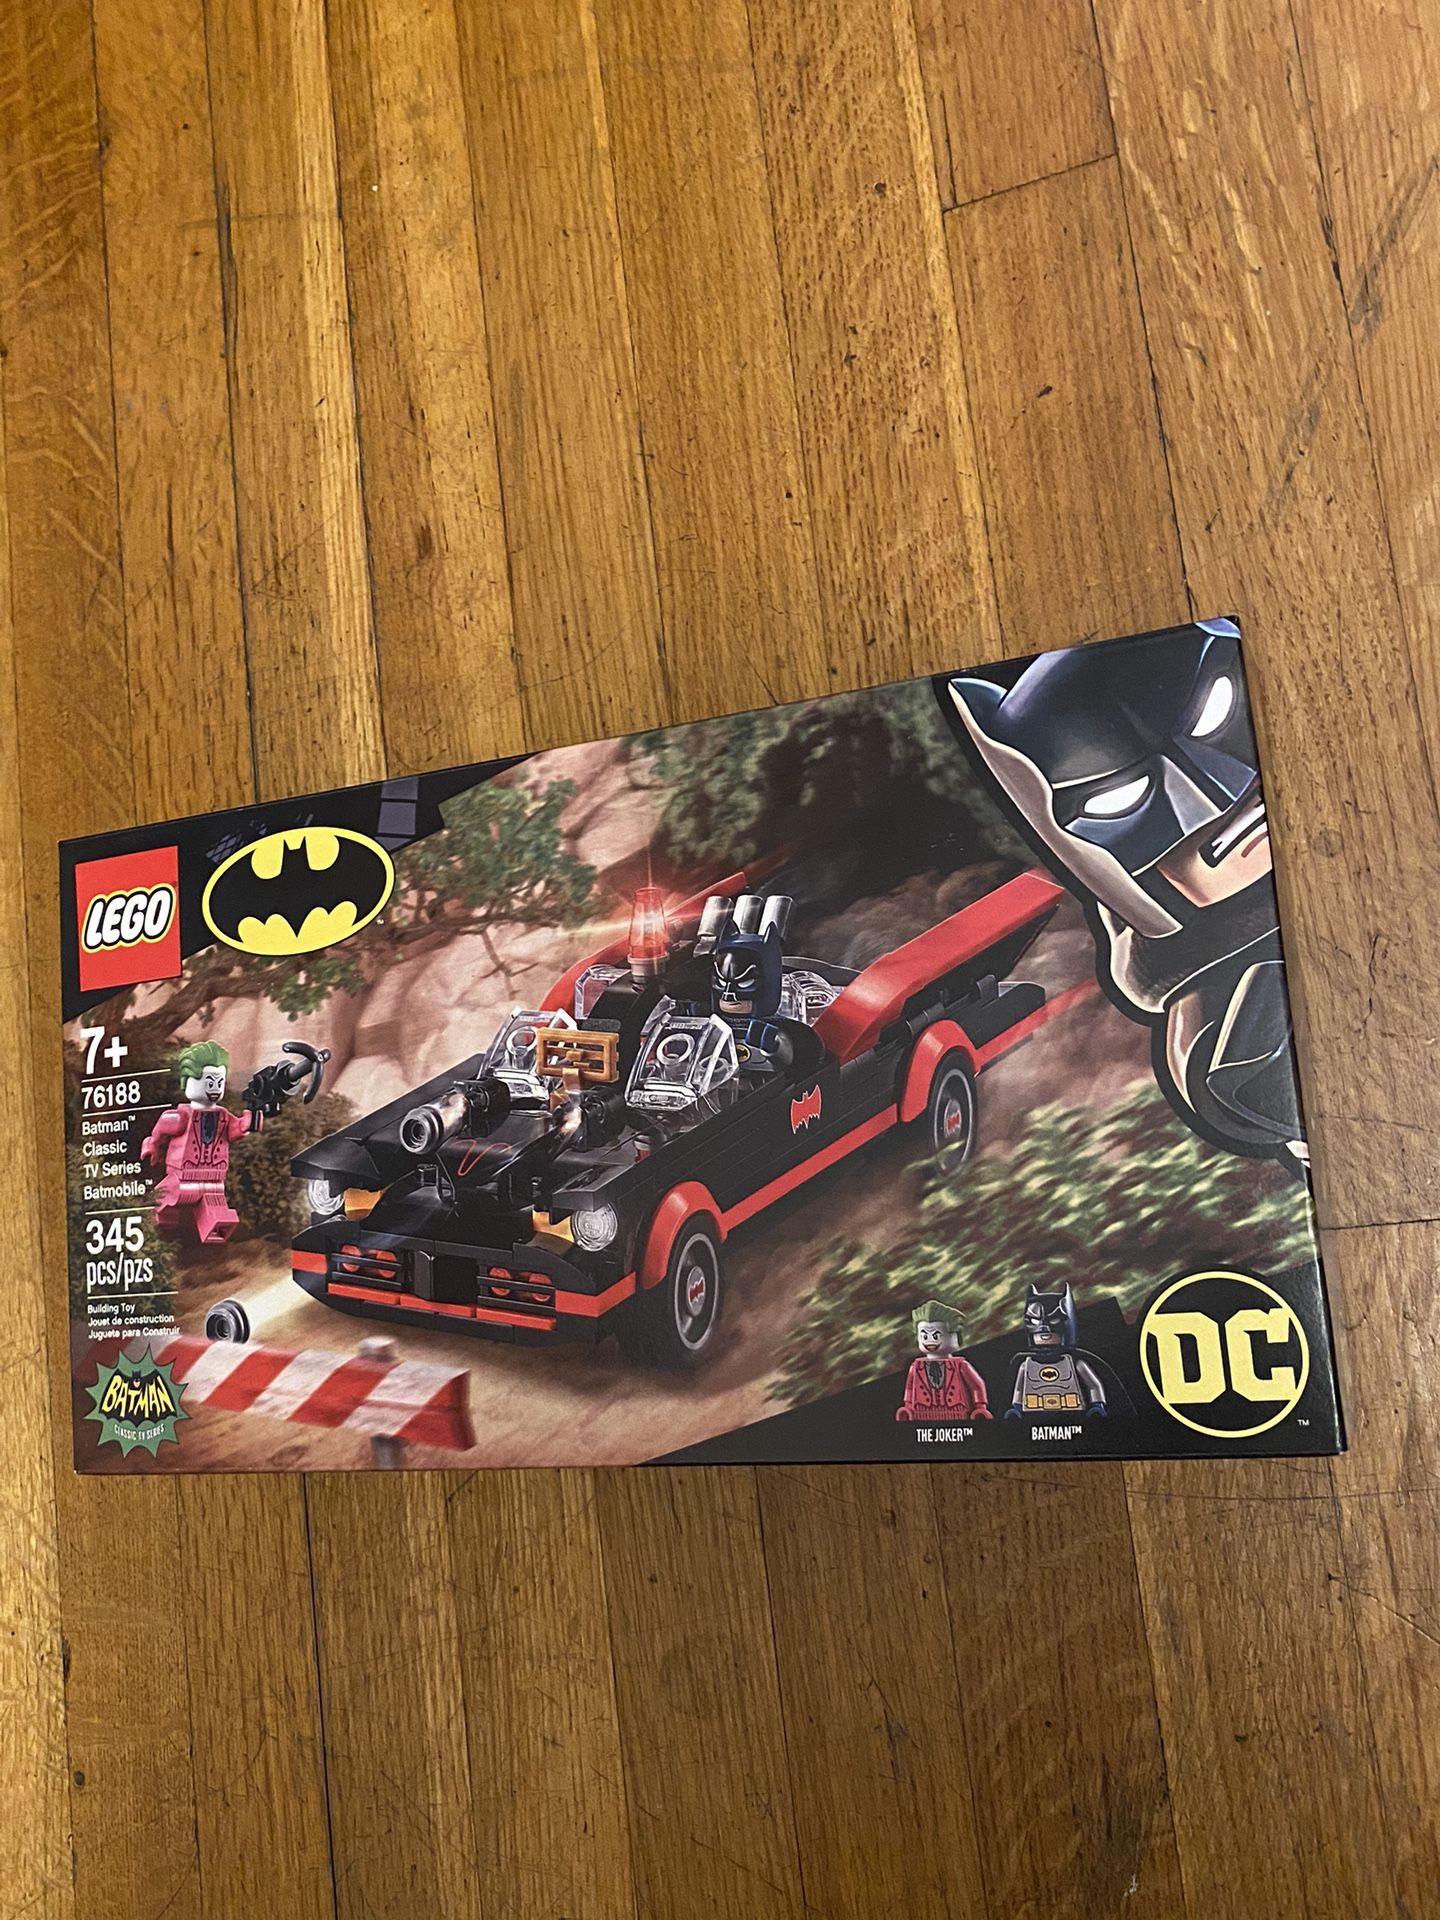 Lego DC Batman Classic TV Series Batmobile (76188) Brand new